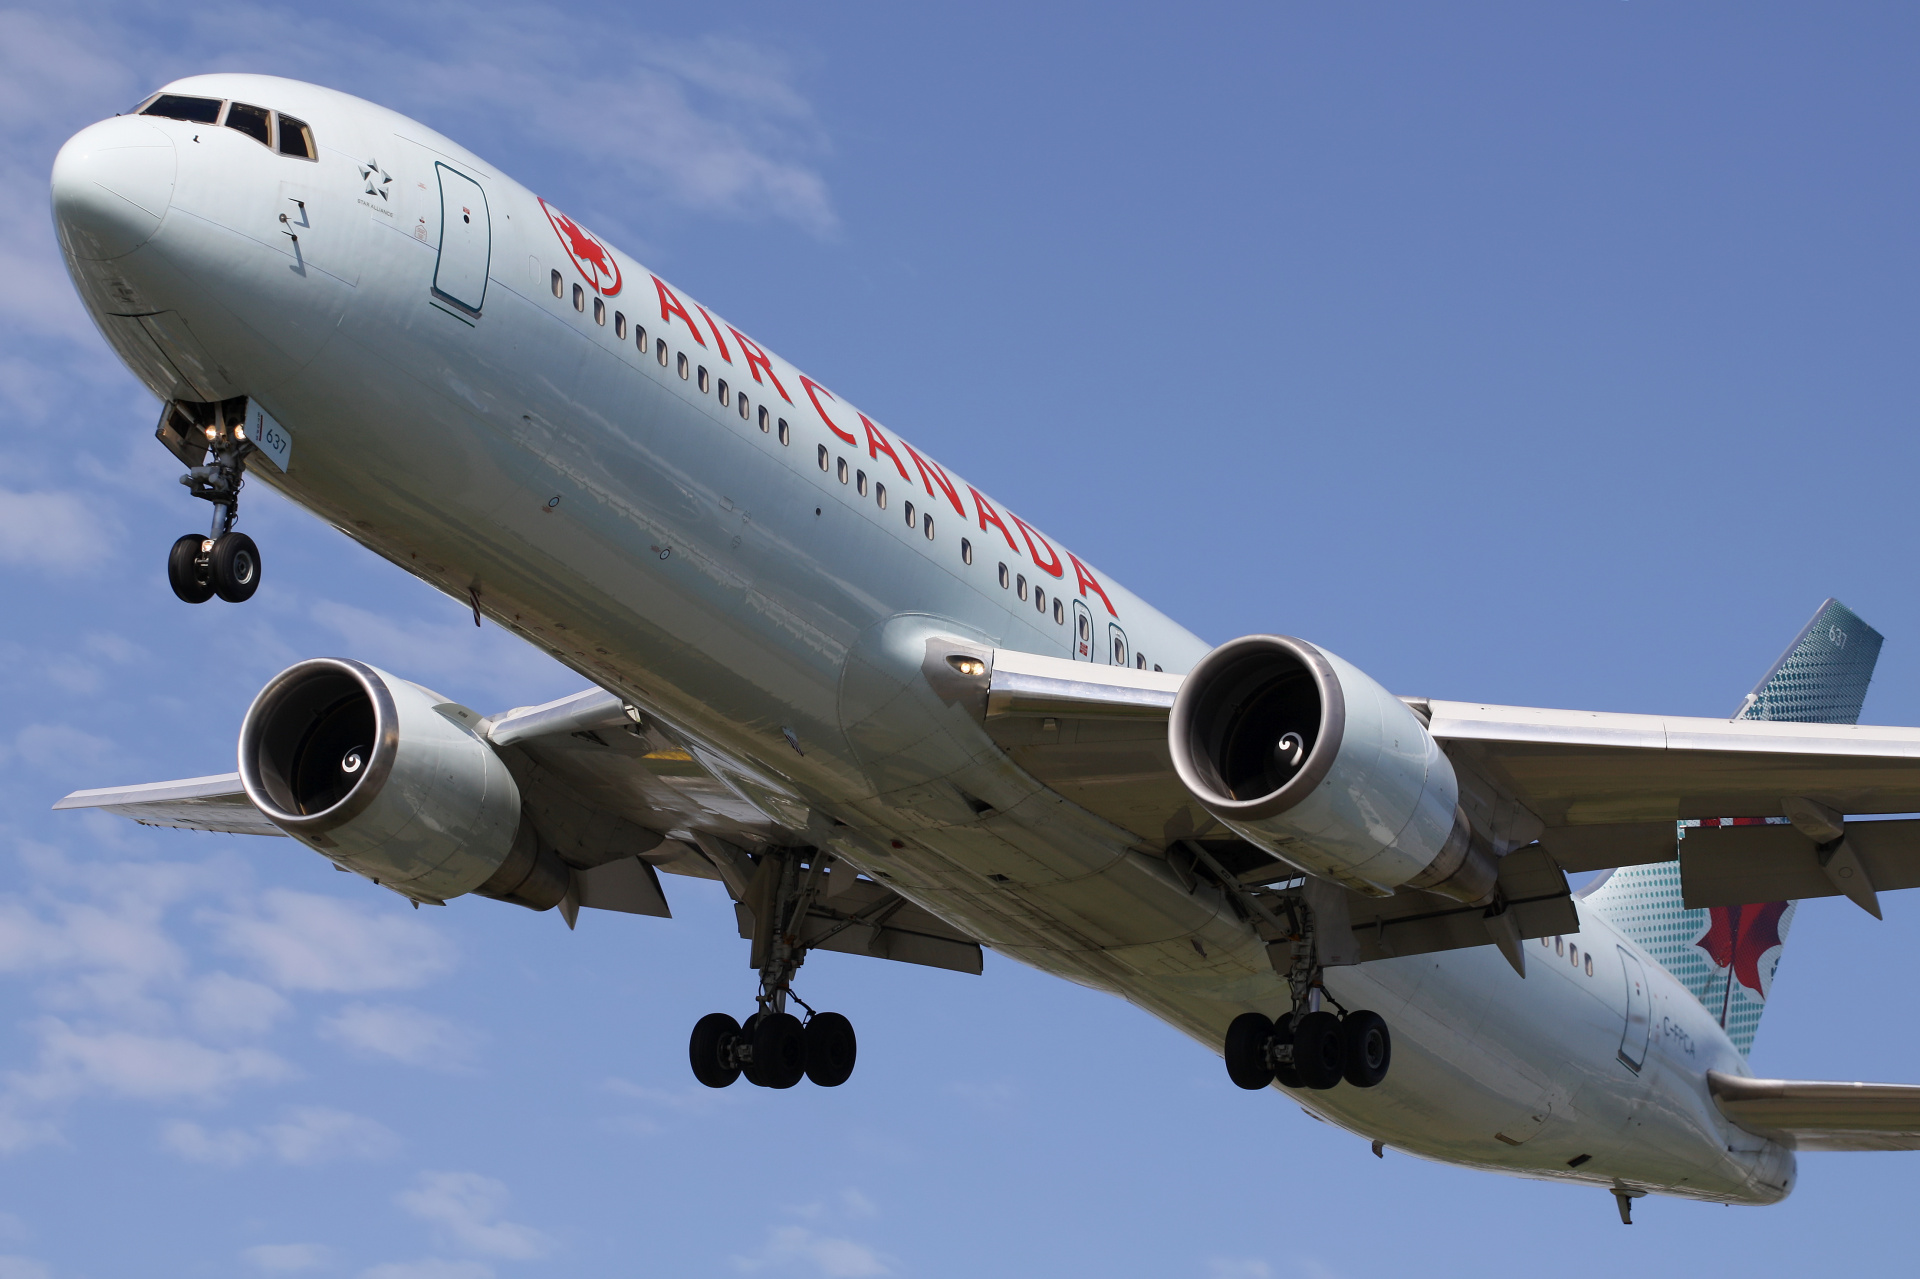 C-FPCA (Aircraft » EPWA Spotting » Boeing 767-300 » Air Canada)